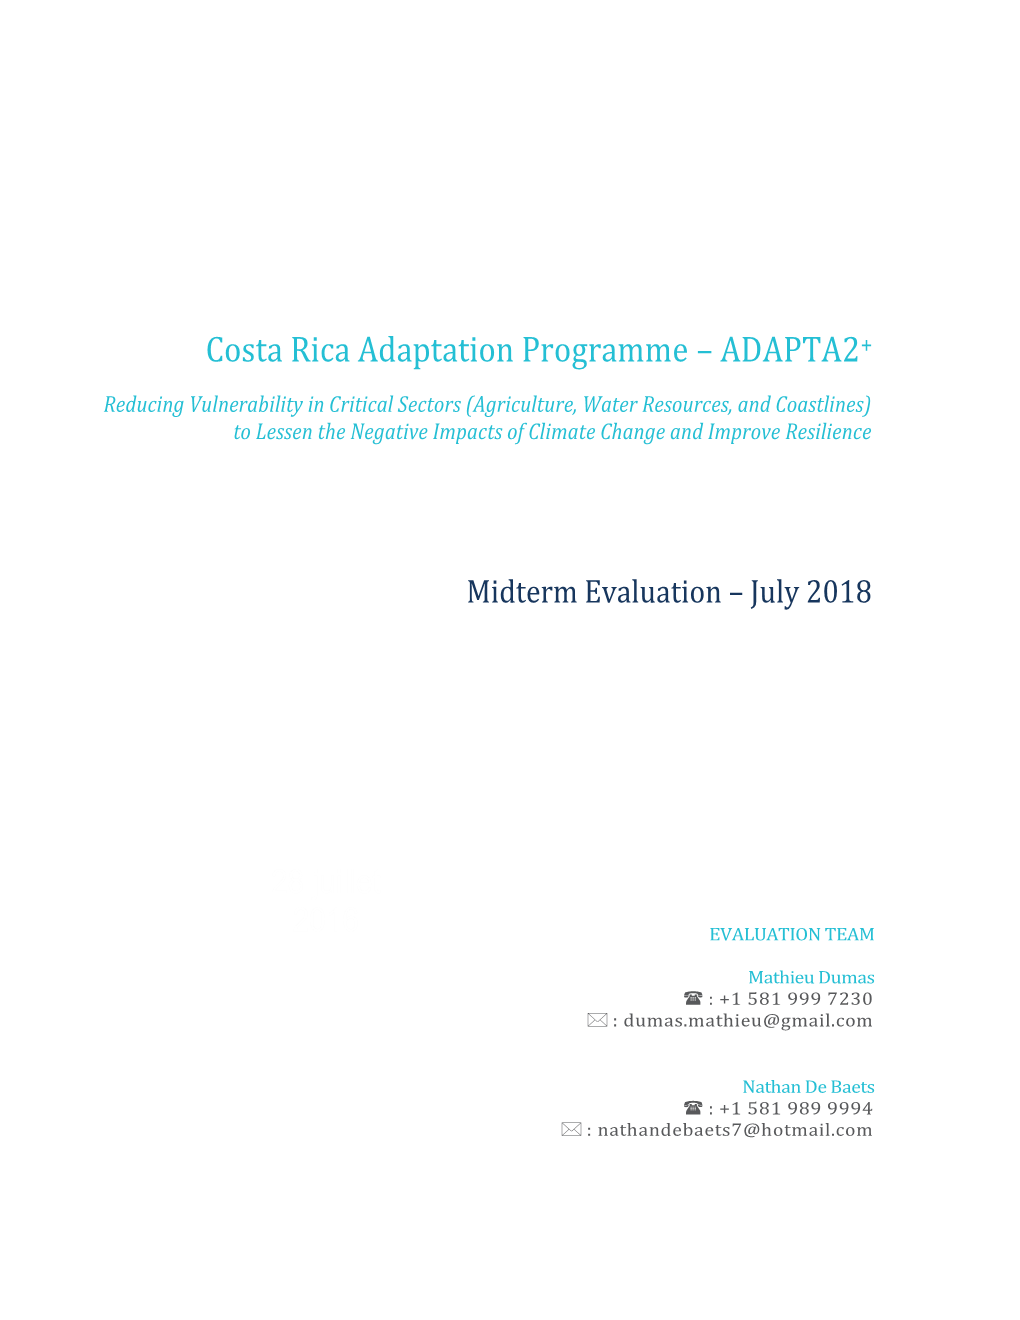 Costa Rica Adaptation Programme – ADAPTA2+